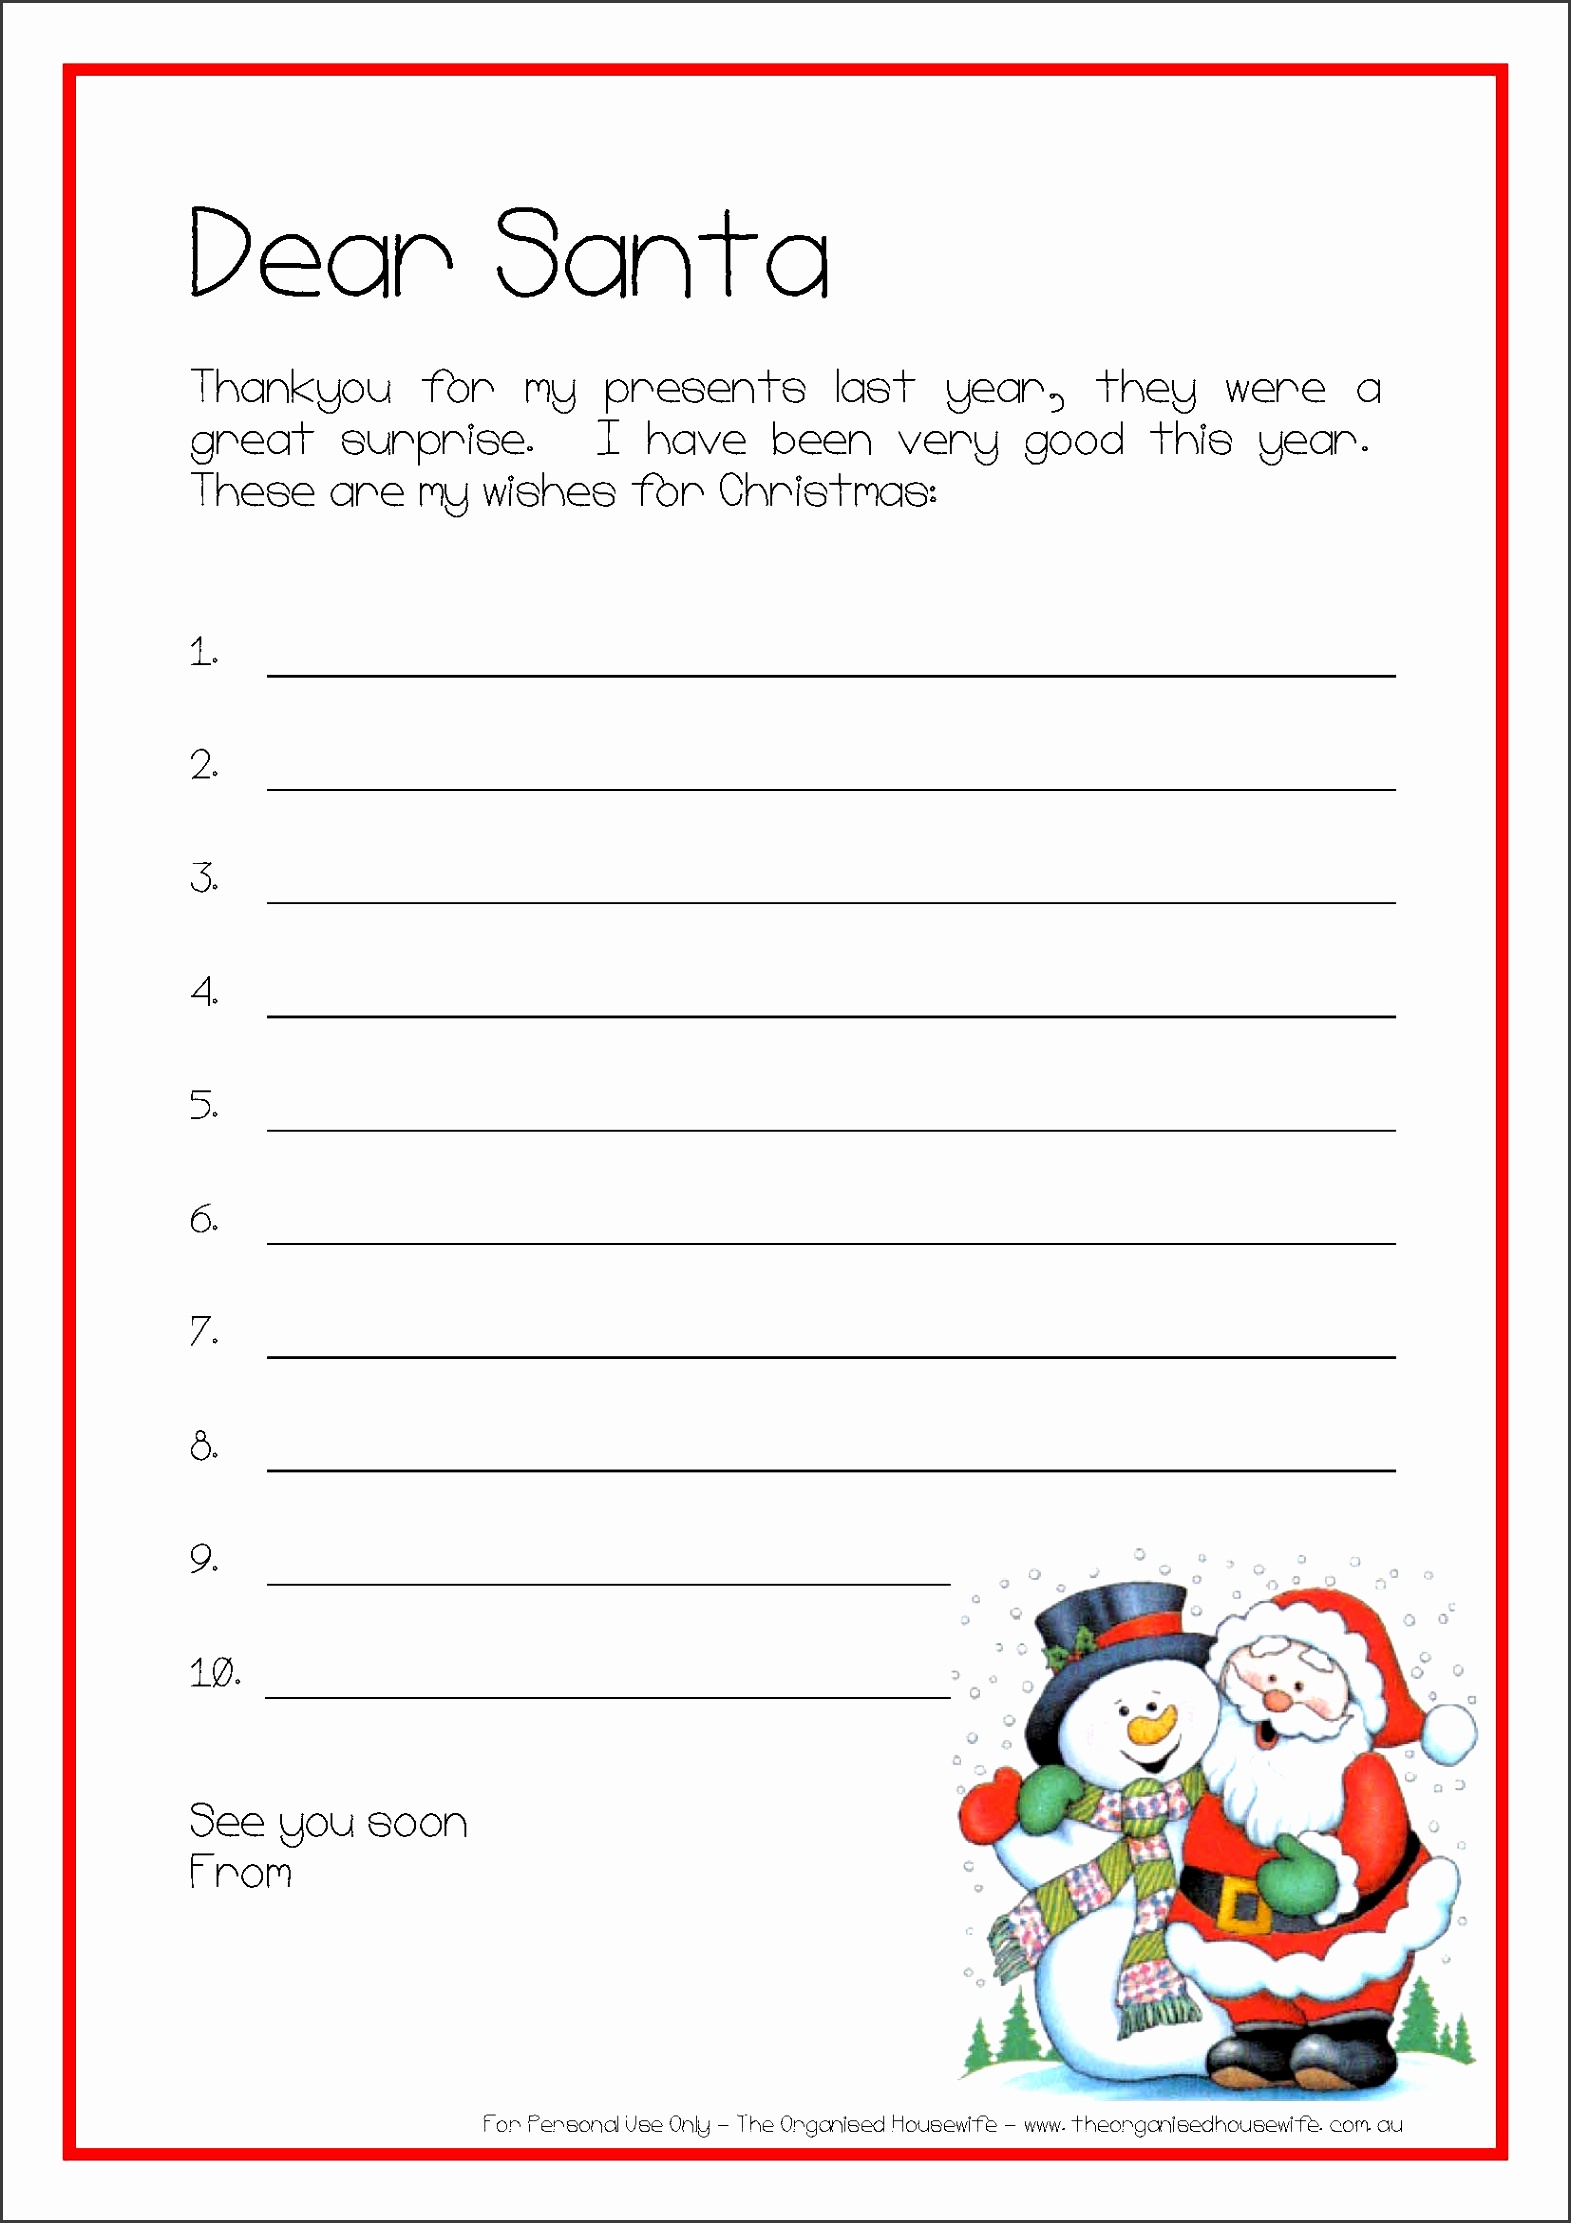 5 Christmas Wish List Templates SampleTemplatess SampleTemplatess